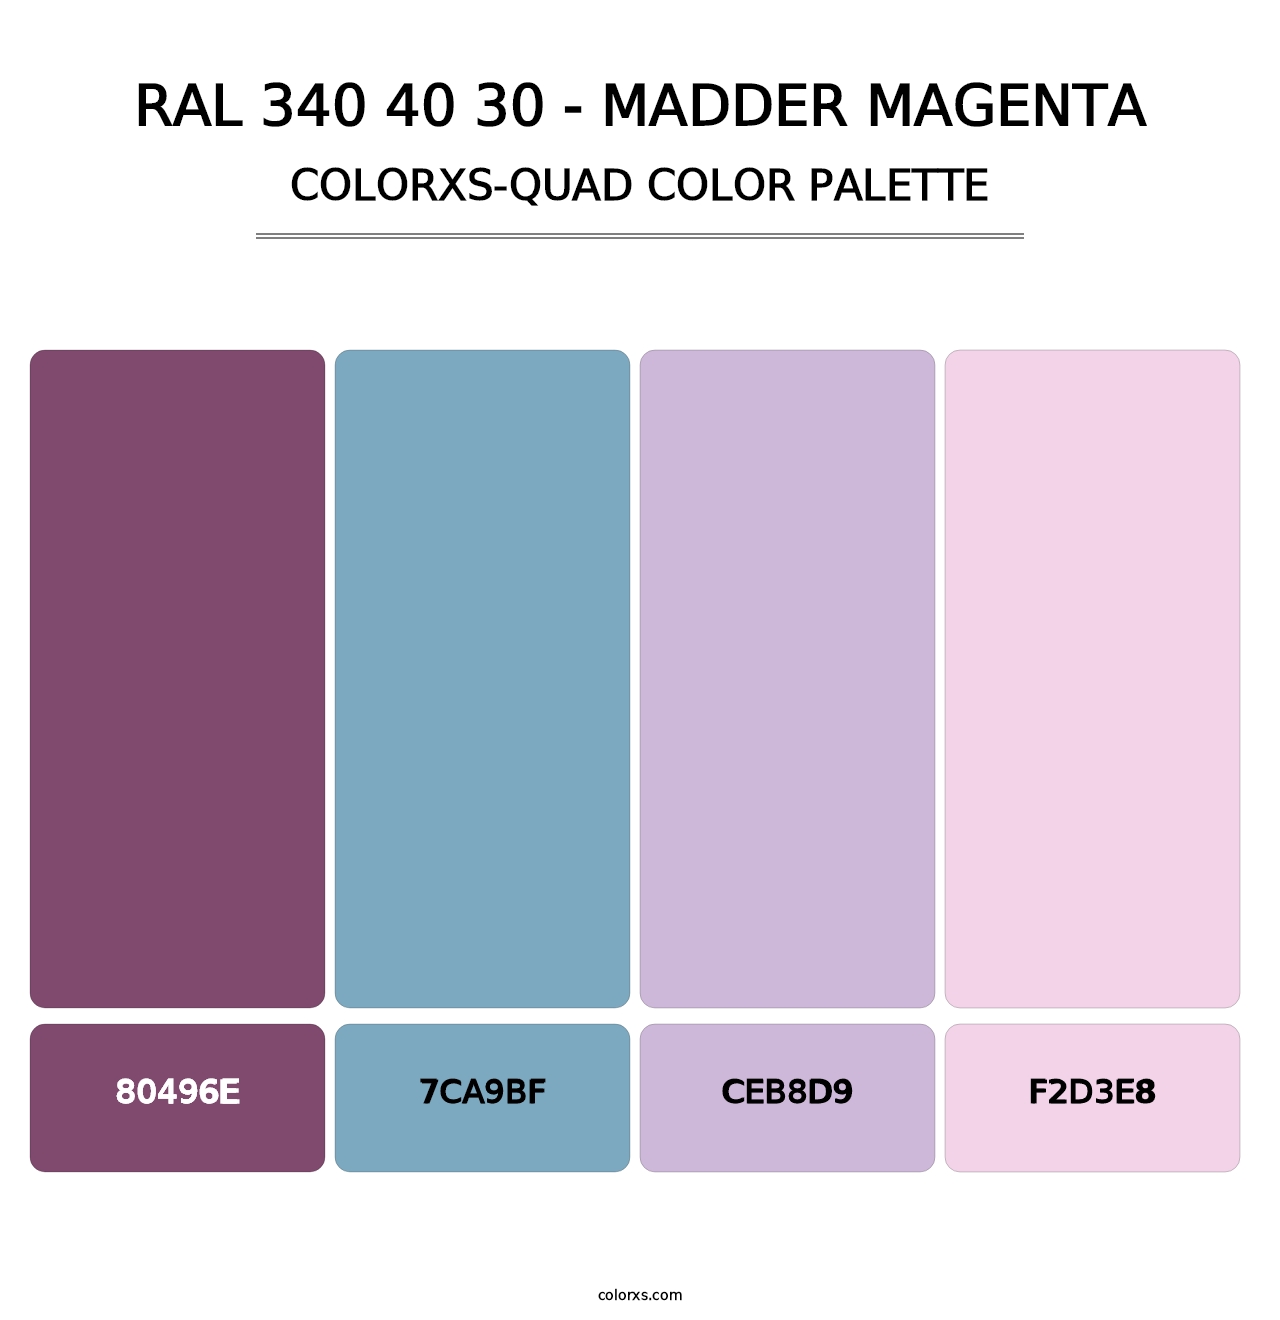 RAL 340 40 30 - Madder Magenta - Colorxs Quad Palette